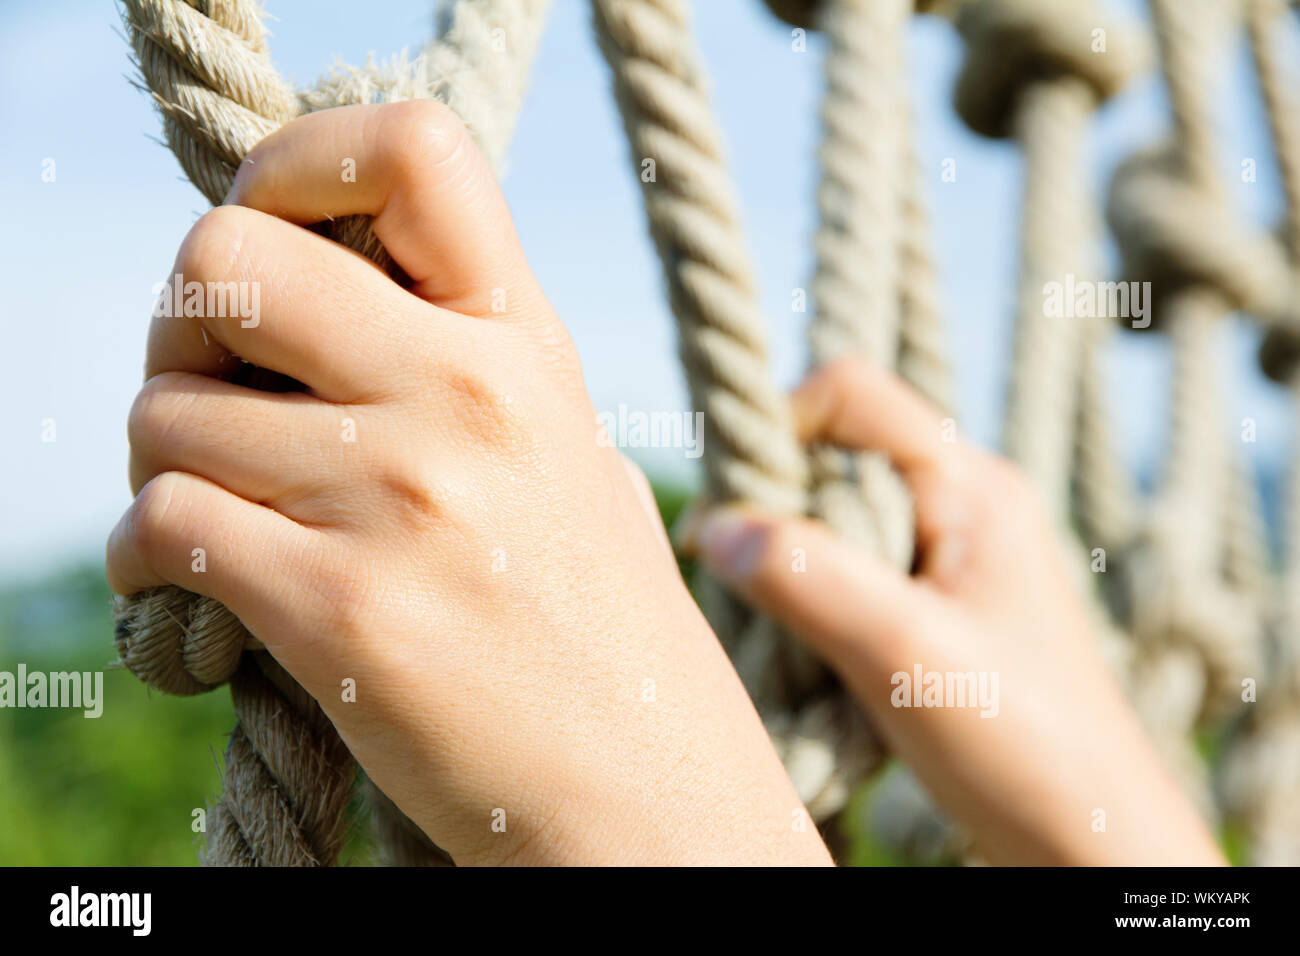 hand holding climbing ropes Stock Photo